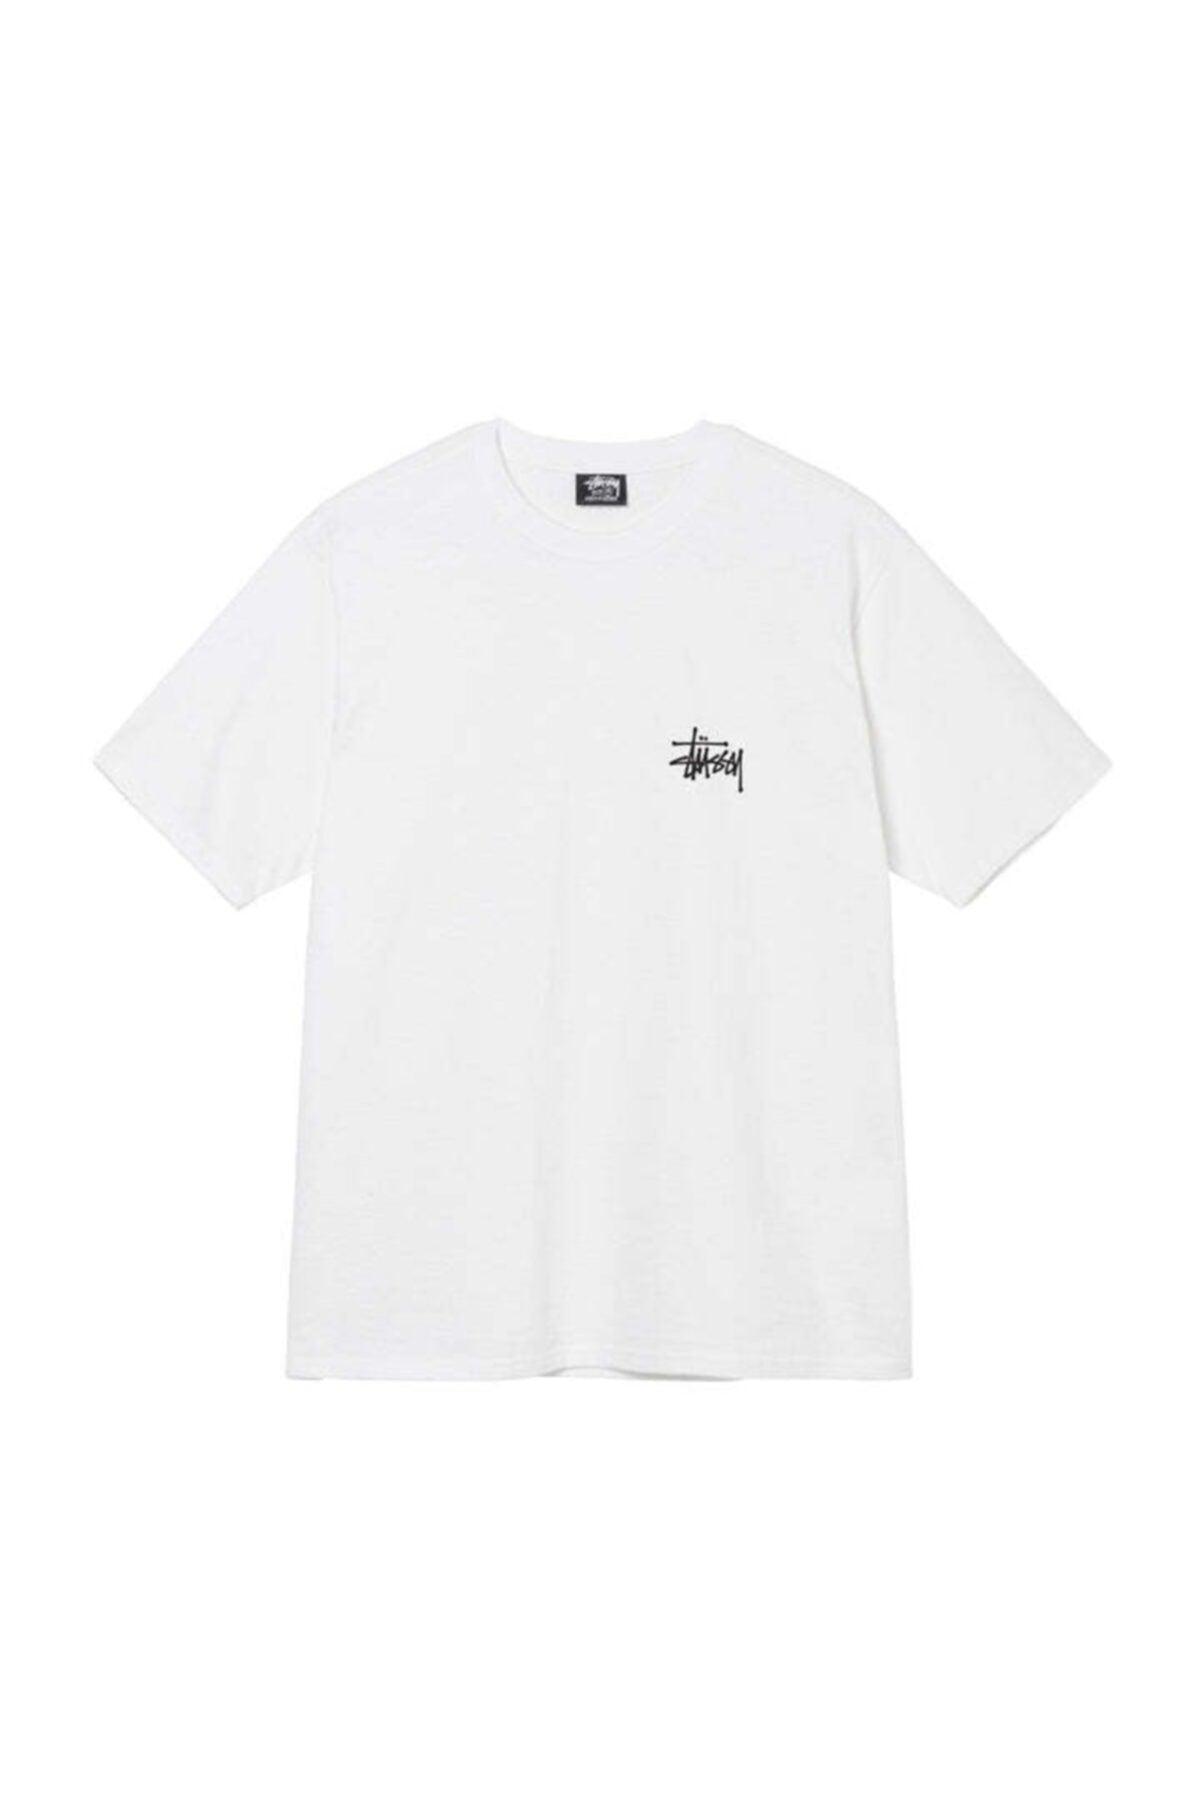 White Back Printed Unisex Short Sleeve T-shirt - Swordslife